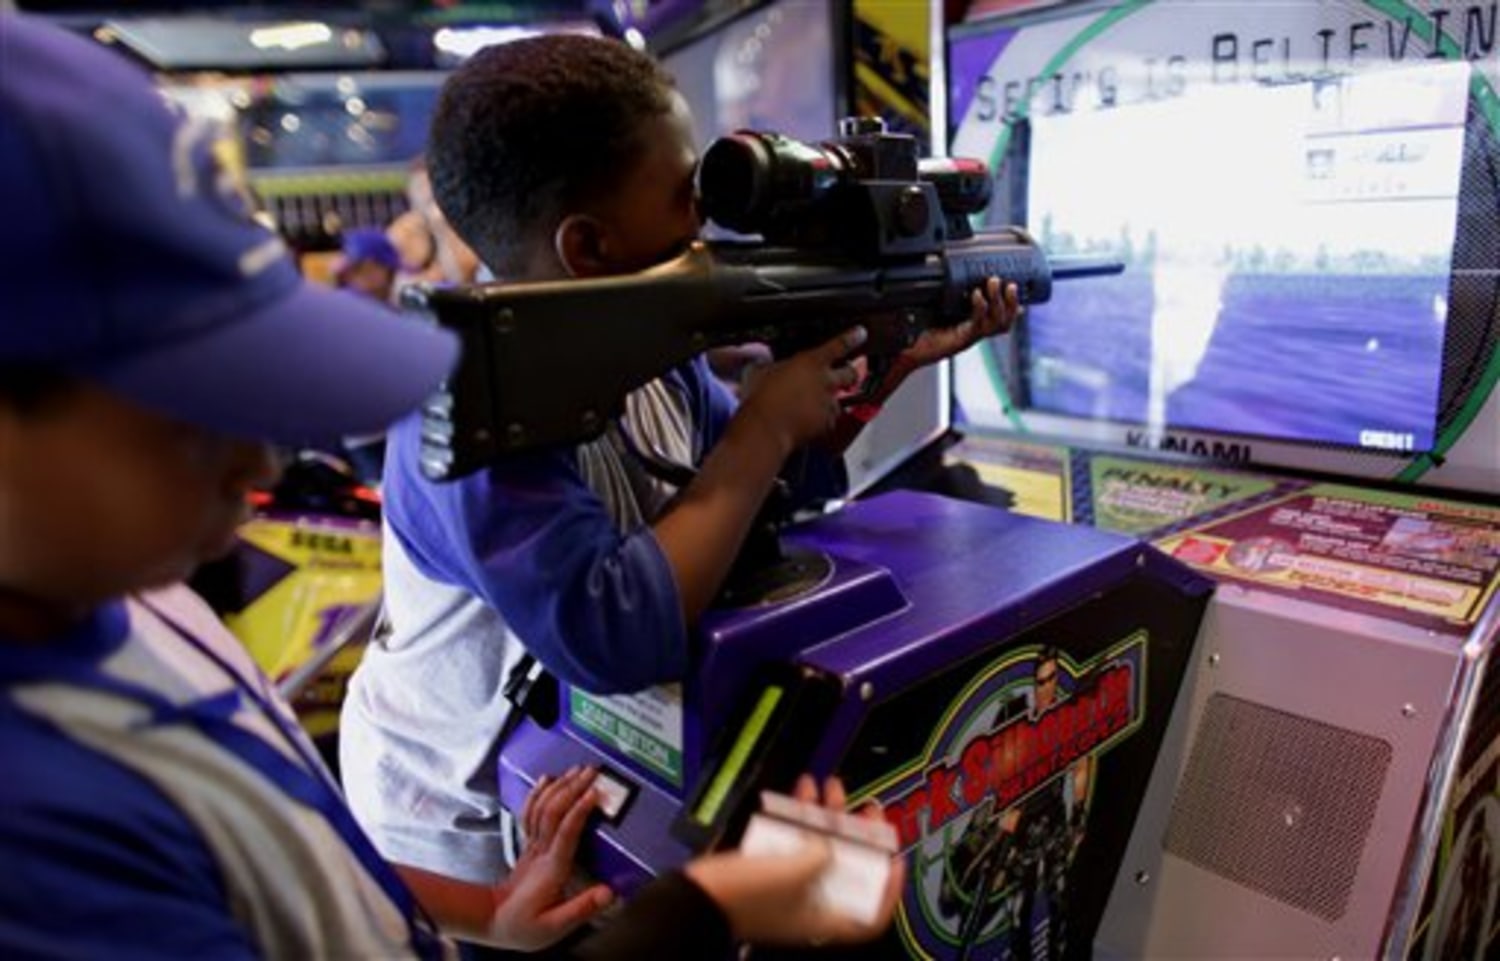 Ban Violent Video Games Violent Video Games Pros And Cons